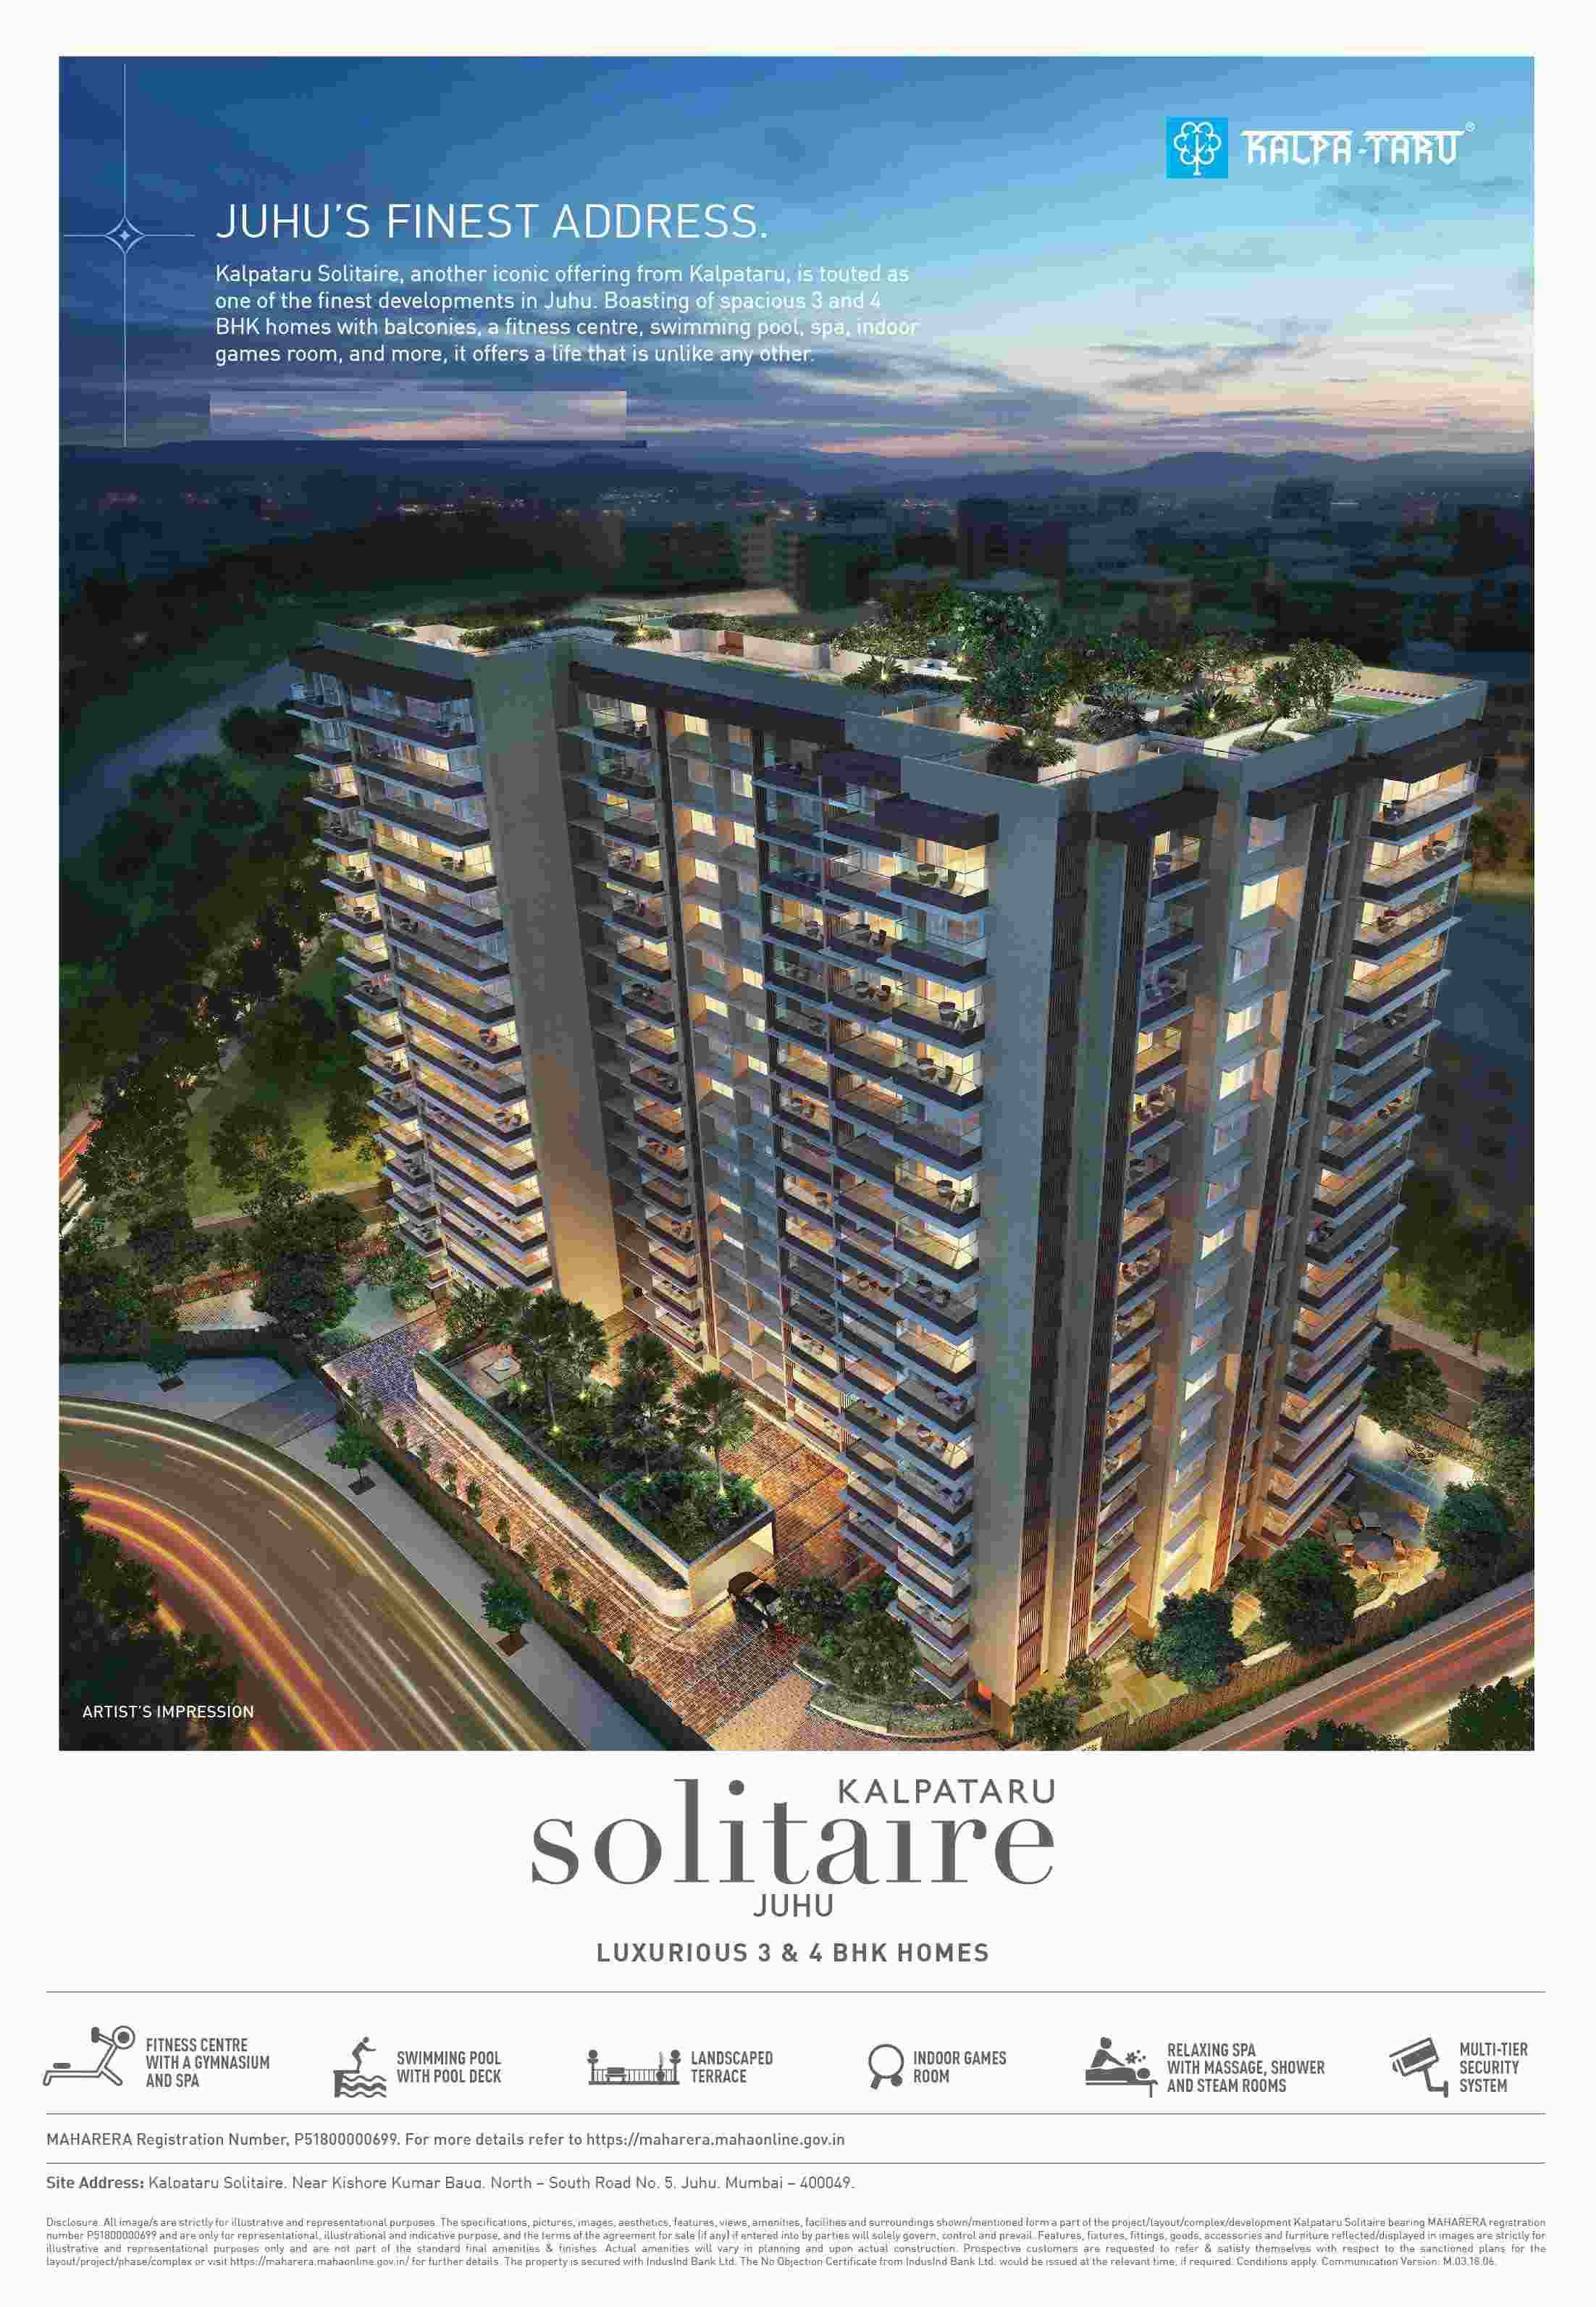 Book luxurious 3 & 4 BHK homes with world class amenities at Kalpataru Solitaire in Mumbai Update